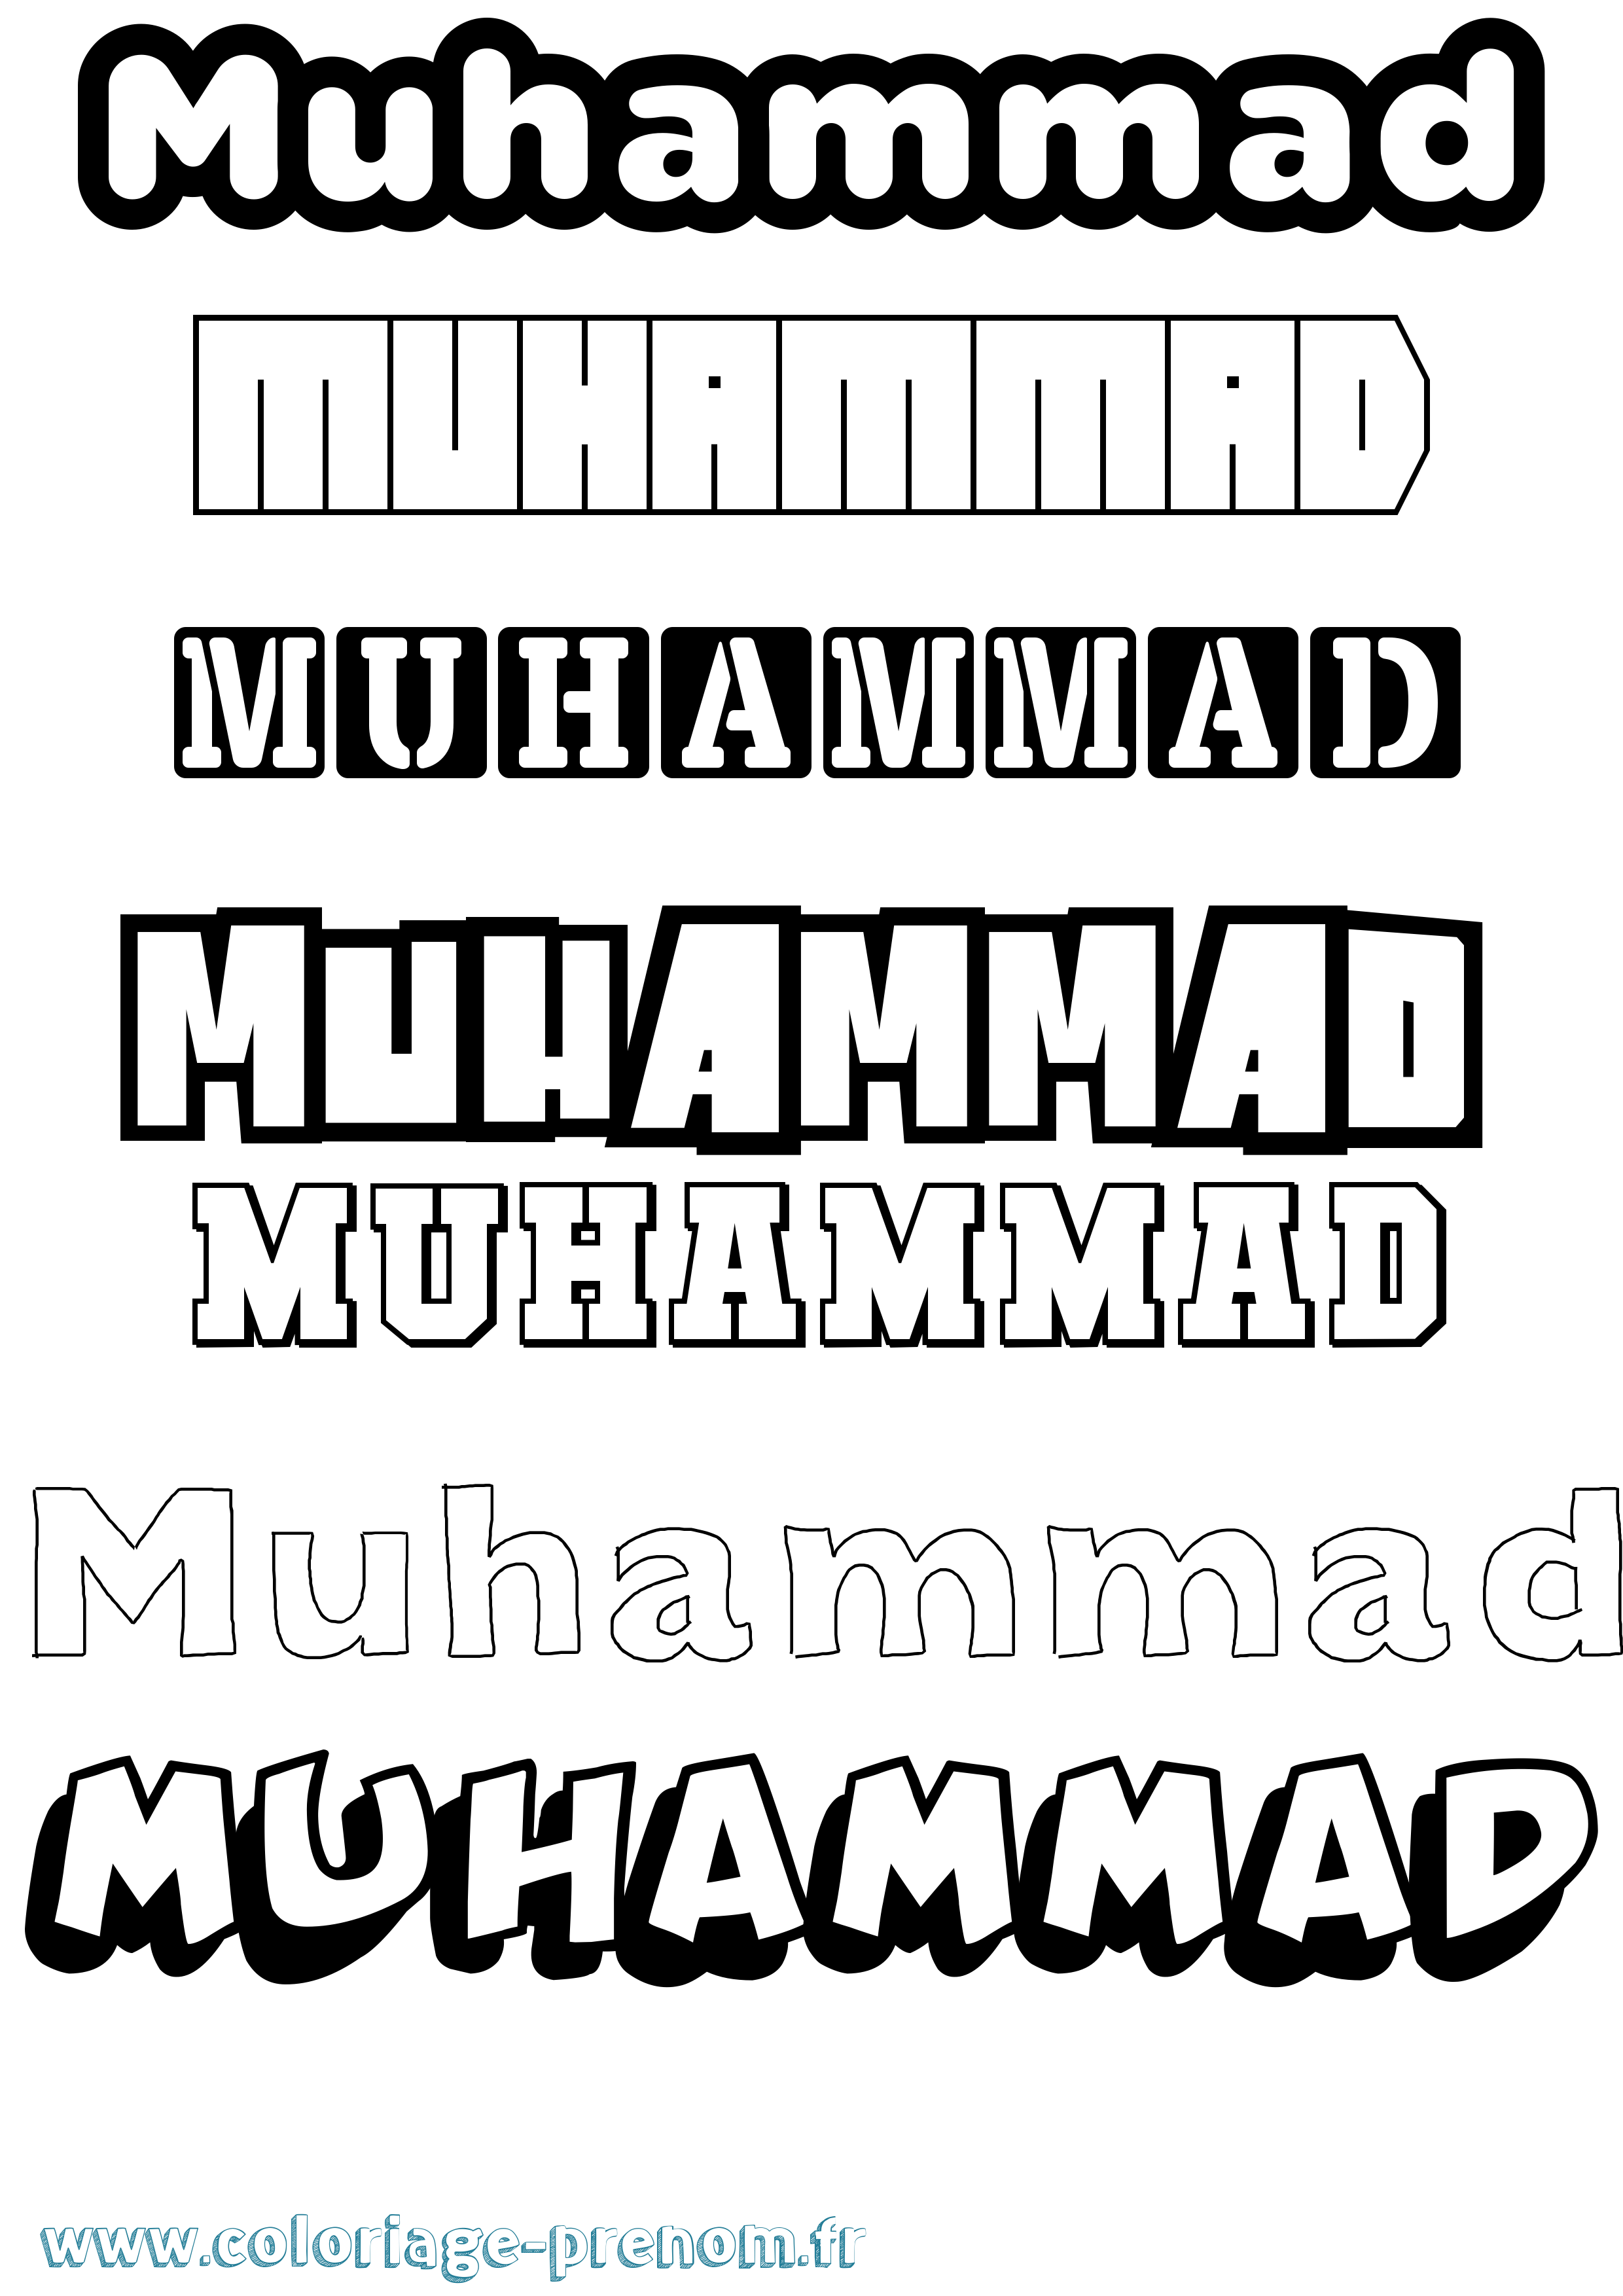 Coloriage prénom Muhammad